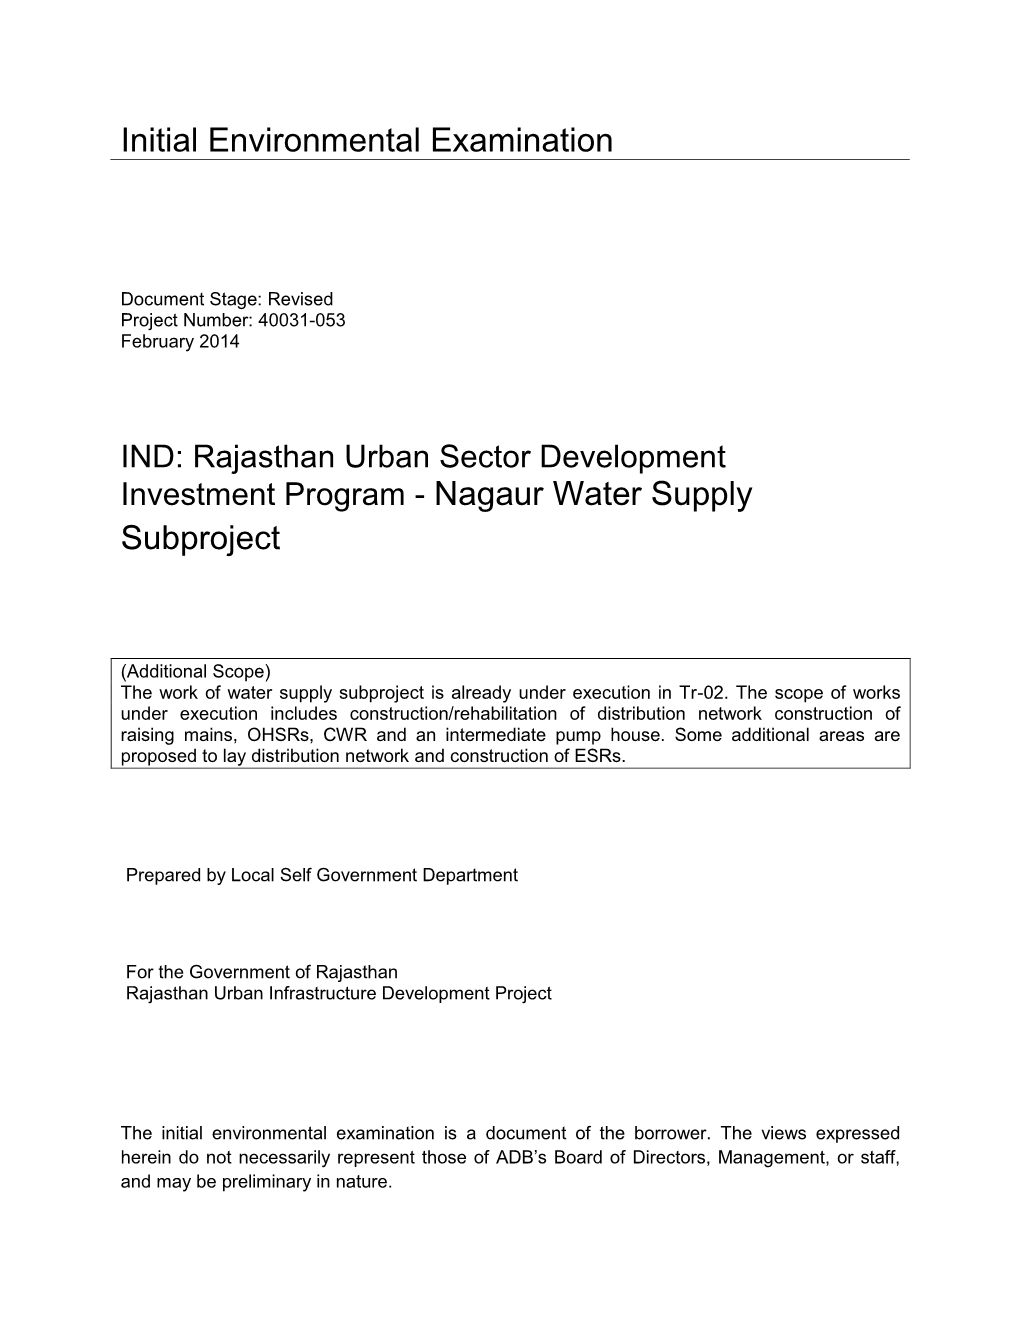 Rajasthan Urban Sector Development Investment Program - Nagaur Water Supply